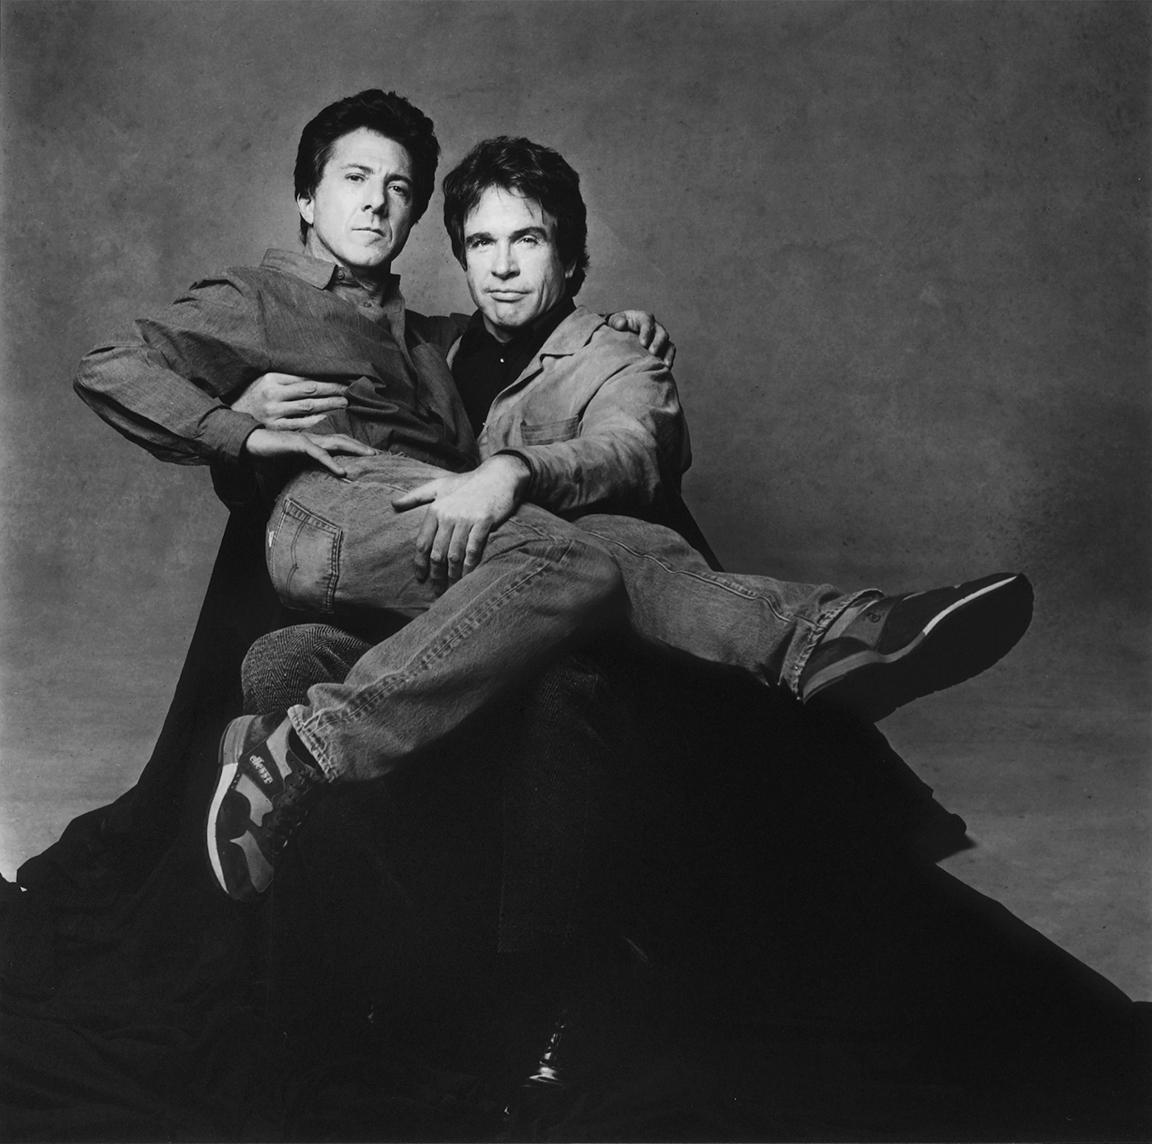 Dustin Hoffman & Warren Beatty, 1987 - Photograph by Patrick Demarchelier